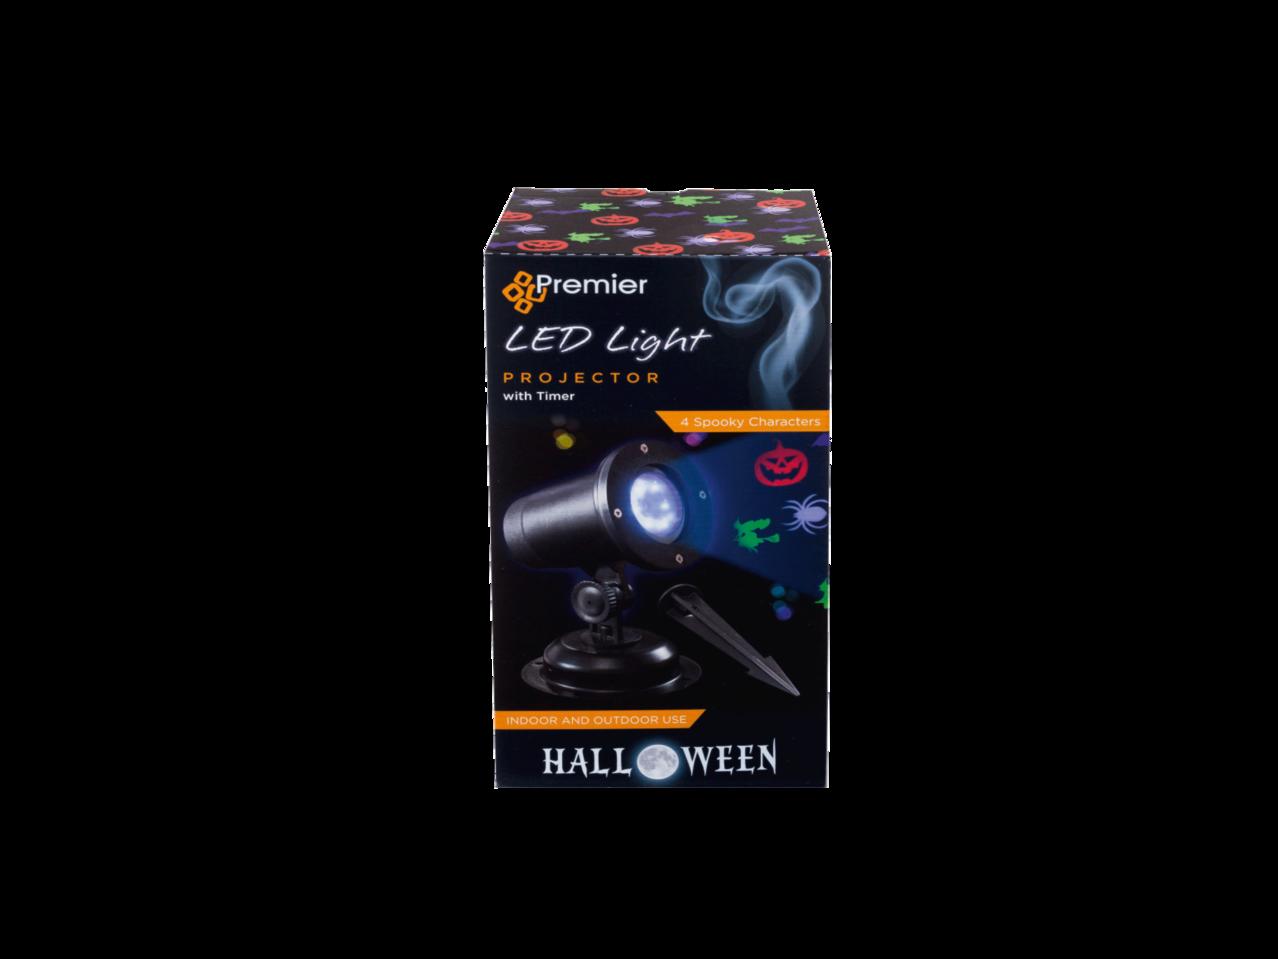 PREMIER Halloween LED Light Projector